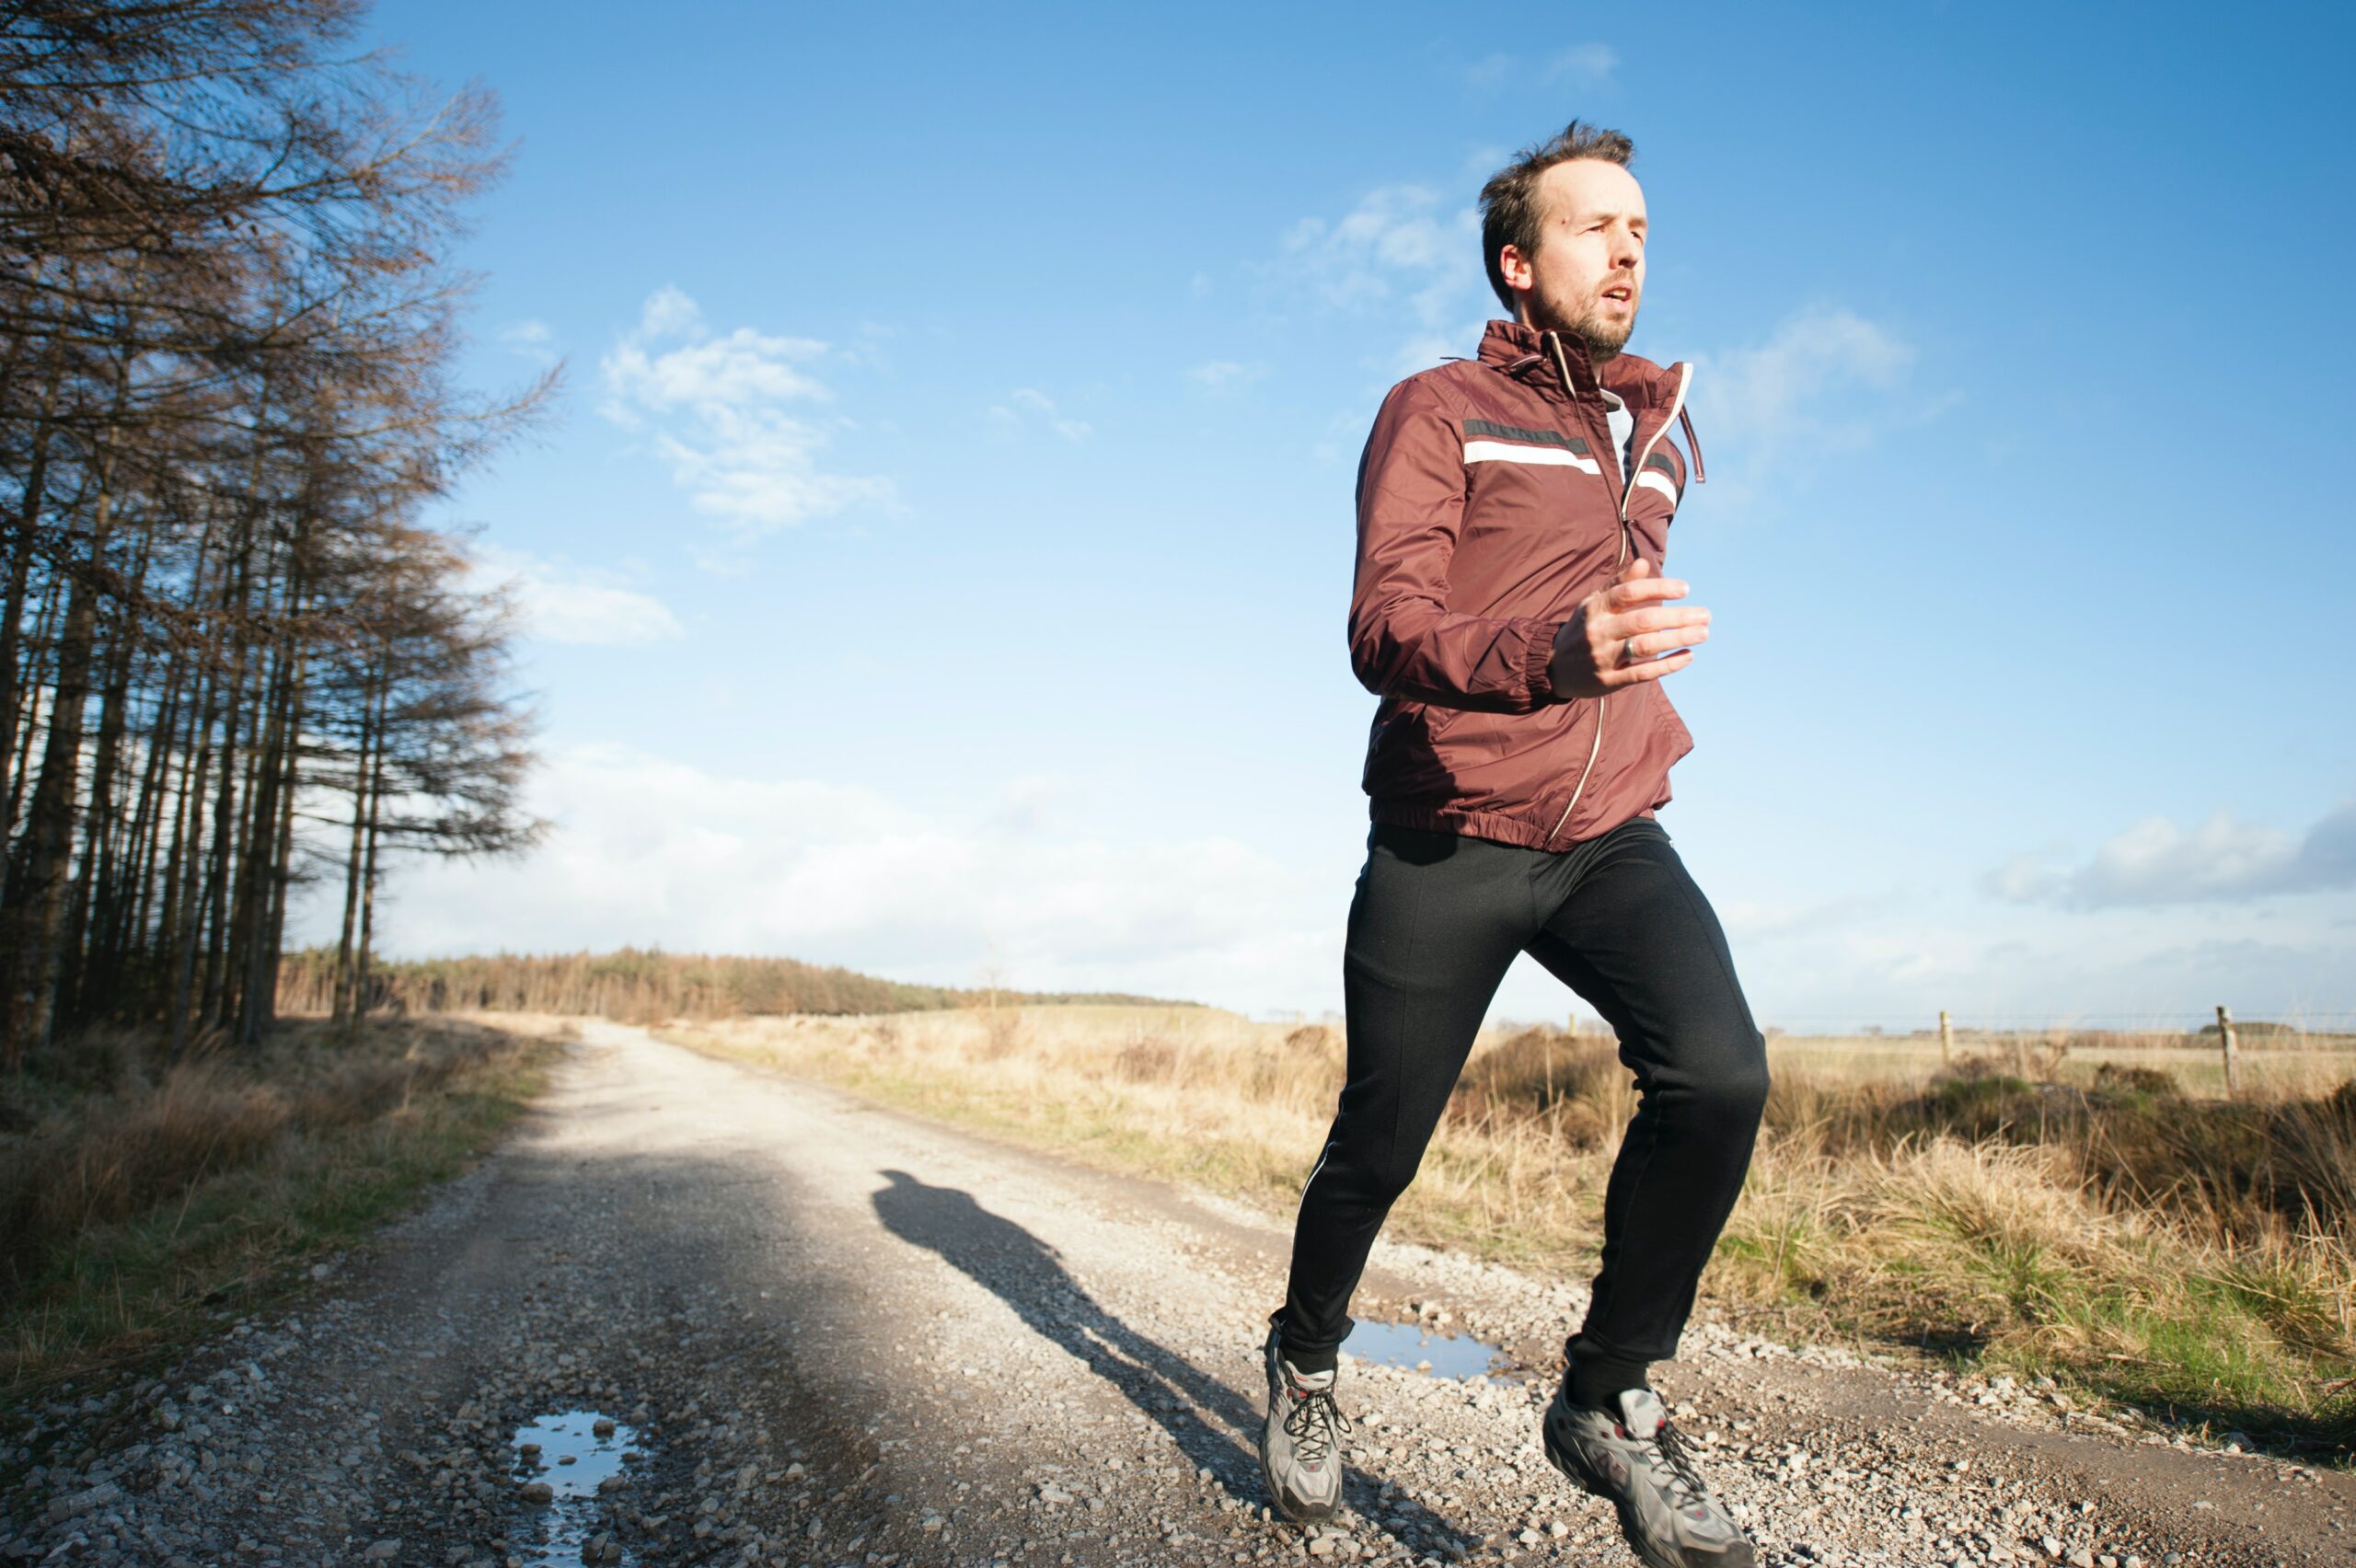 Men's health - man jogging